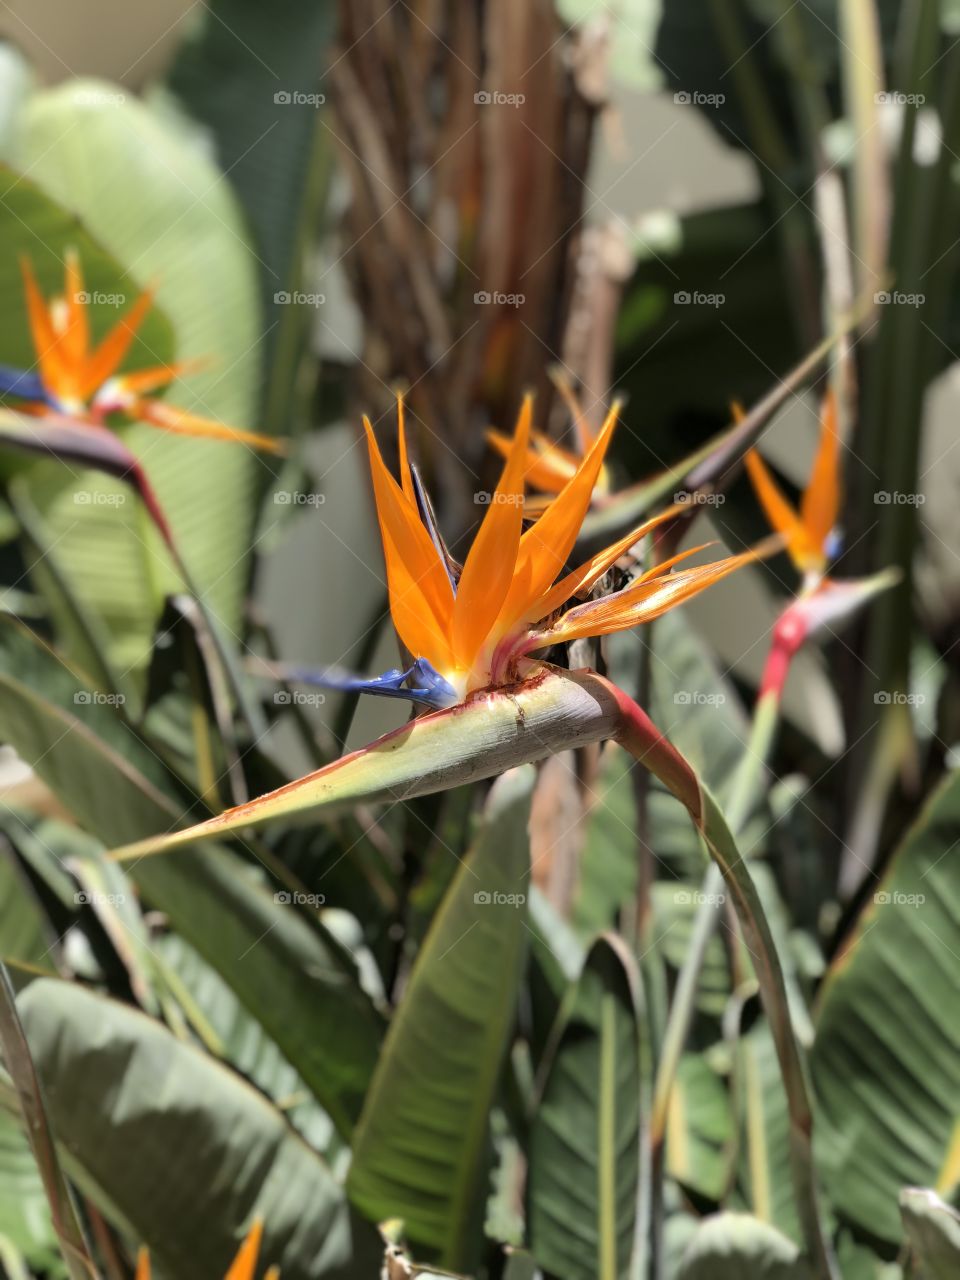 Orange Bird of Paradise Flower in the Garden (Strelitzia)